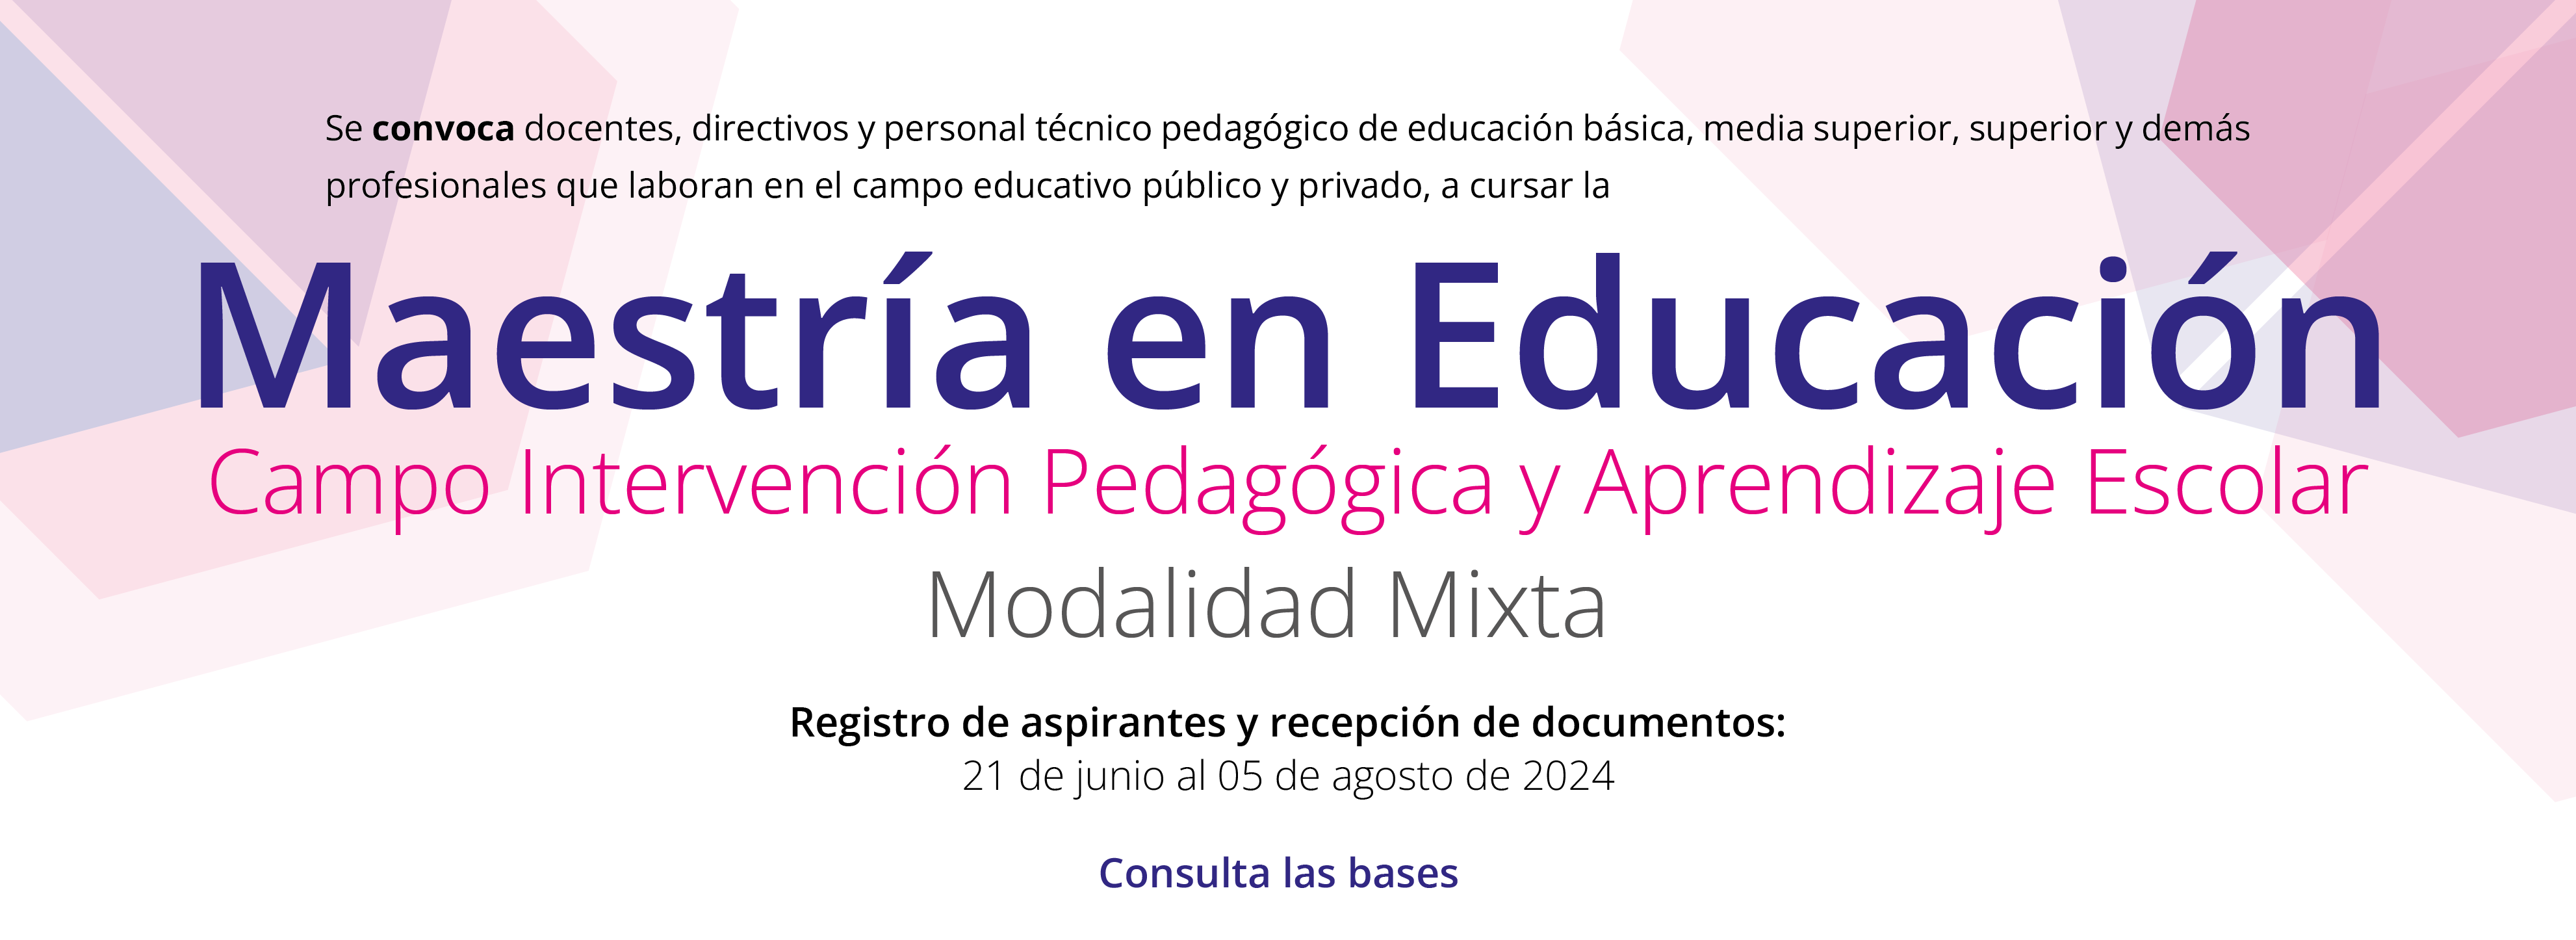 Convocatoria_Maestria_en_Educacion_MIPAE_Culiacan_2024_banner_web